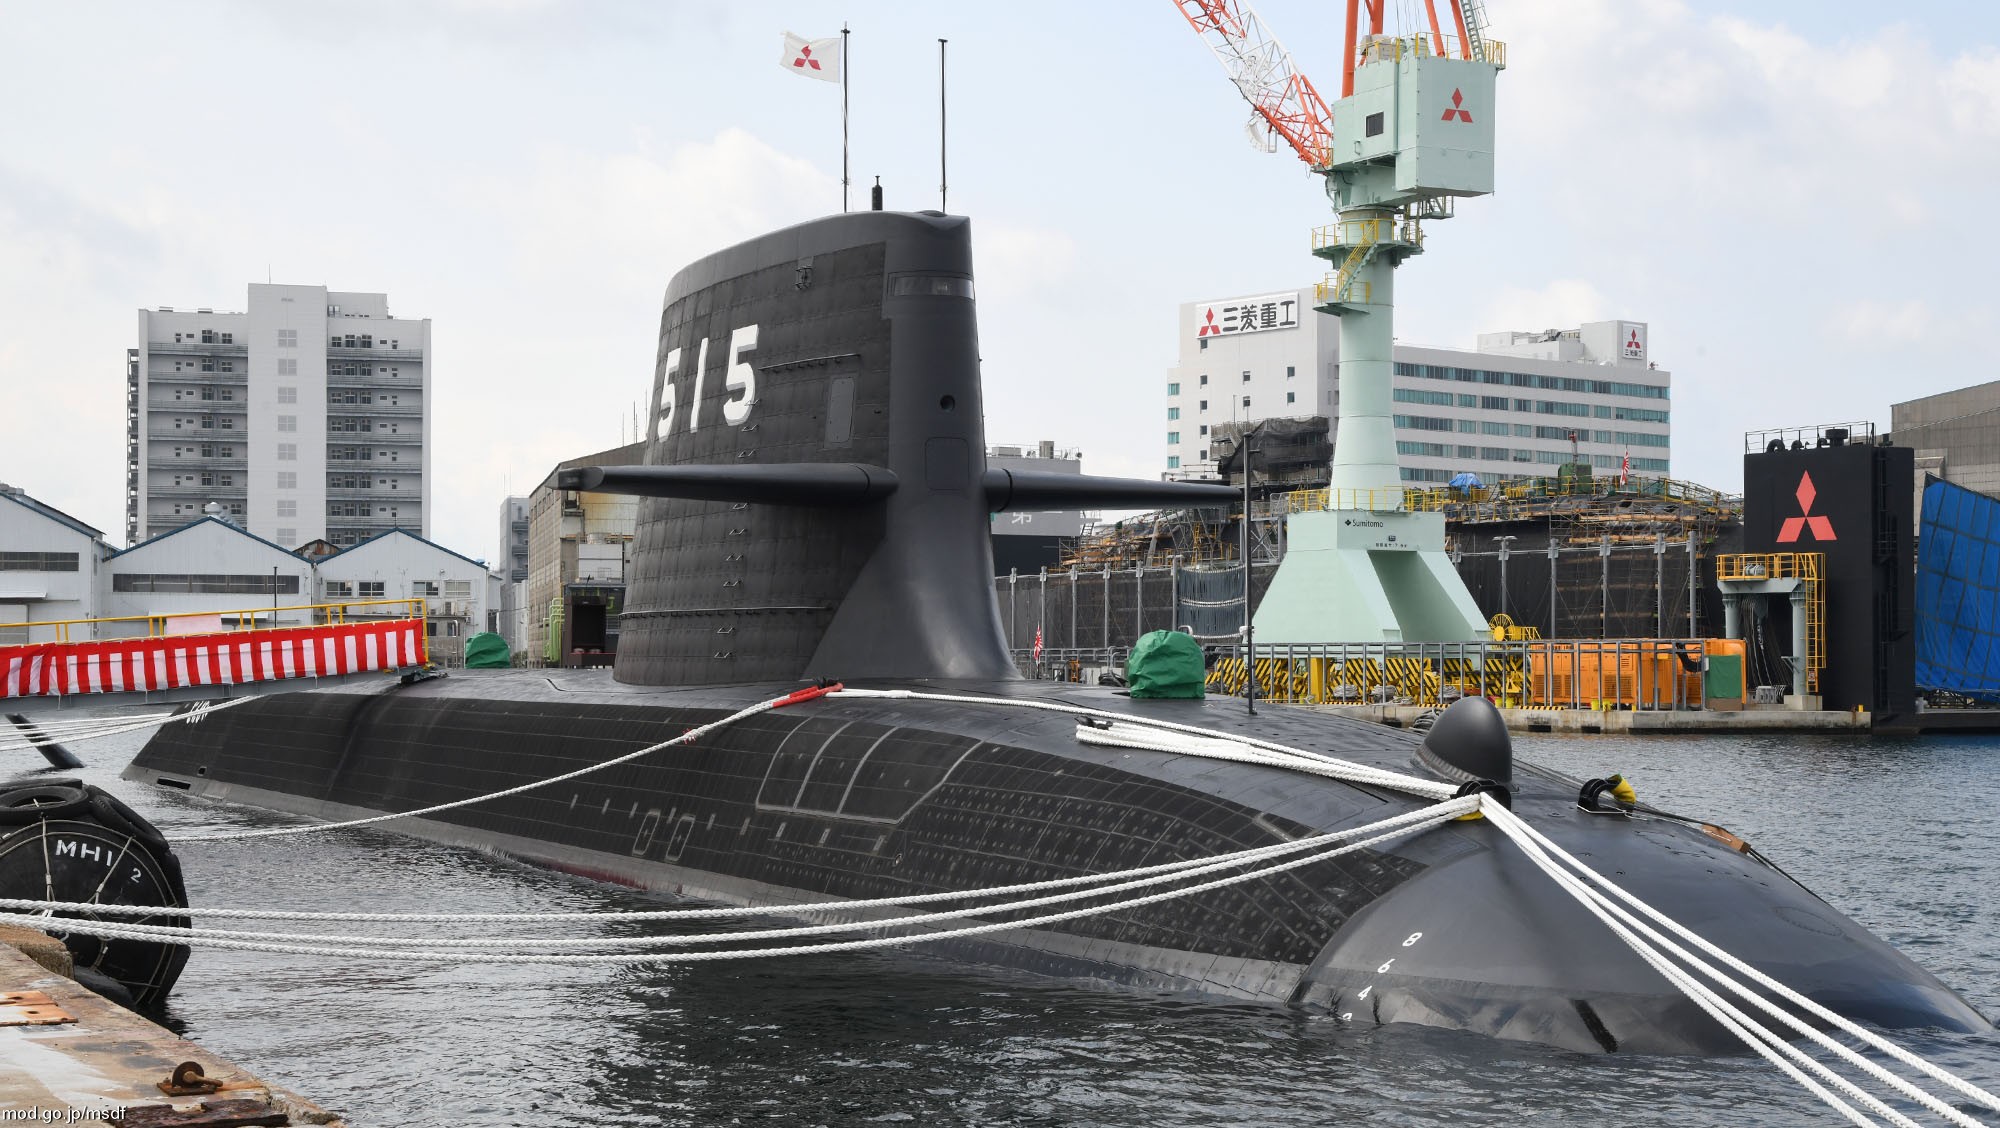 ss-515 js jingei taigei 29ss class attack submarine ssk aip japan maritime self defense force jmsdf commissioning 11